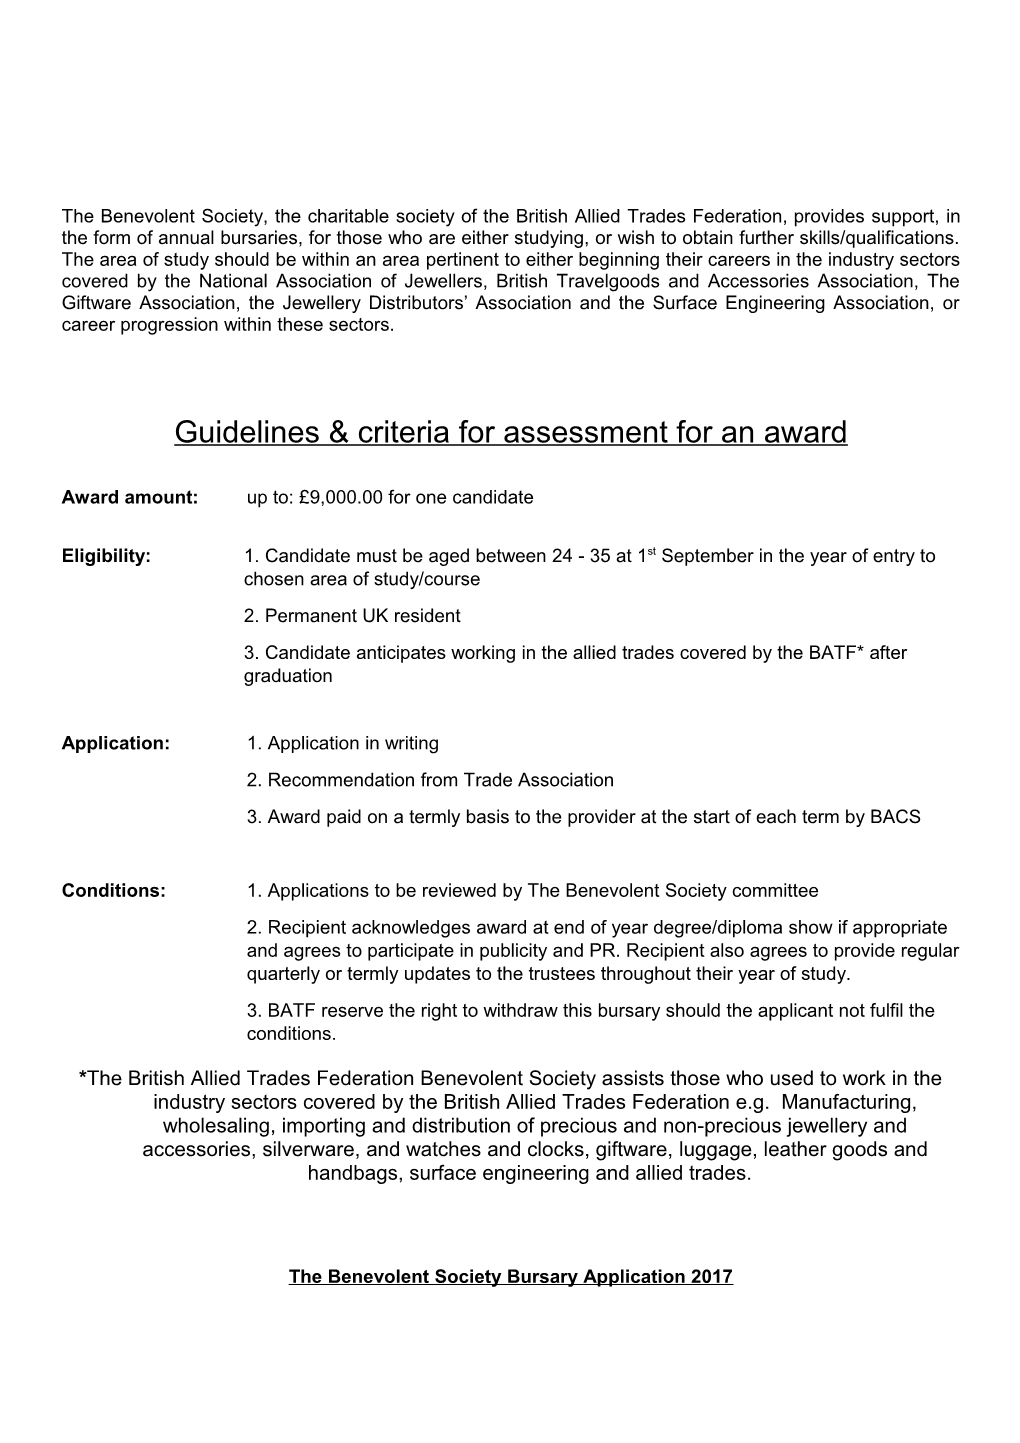 Guidelines & Criteria for Assessment for an Award